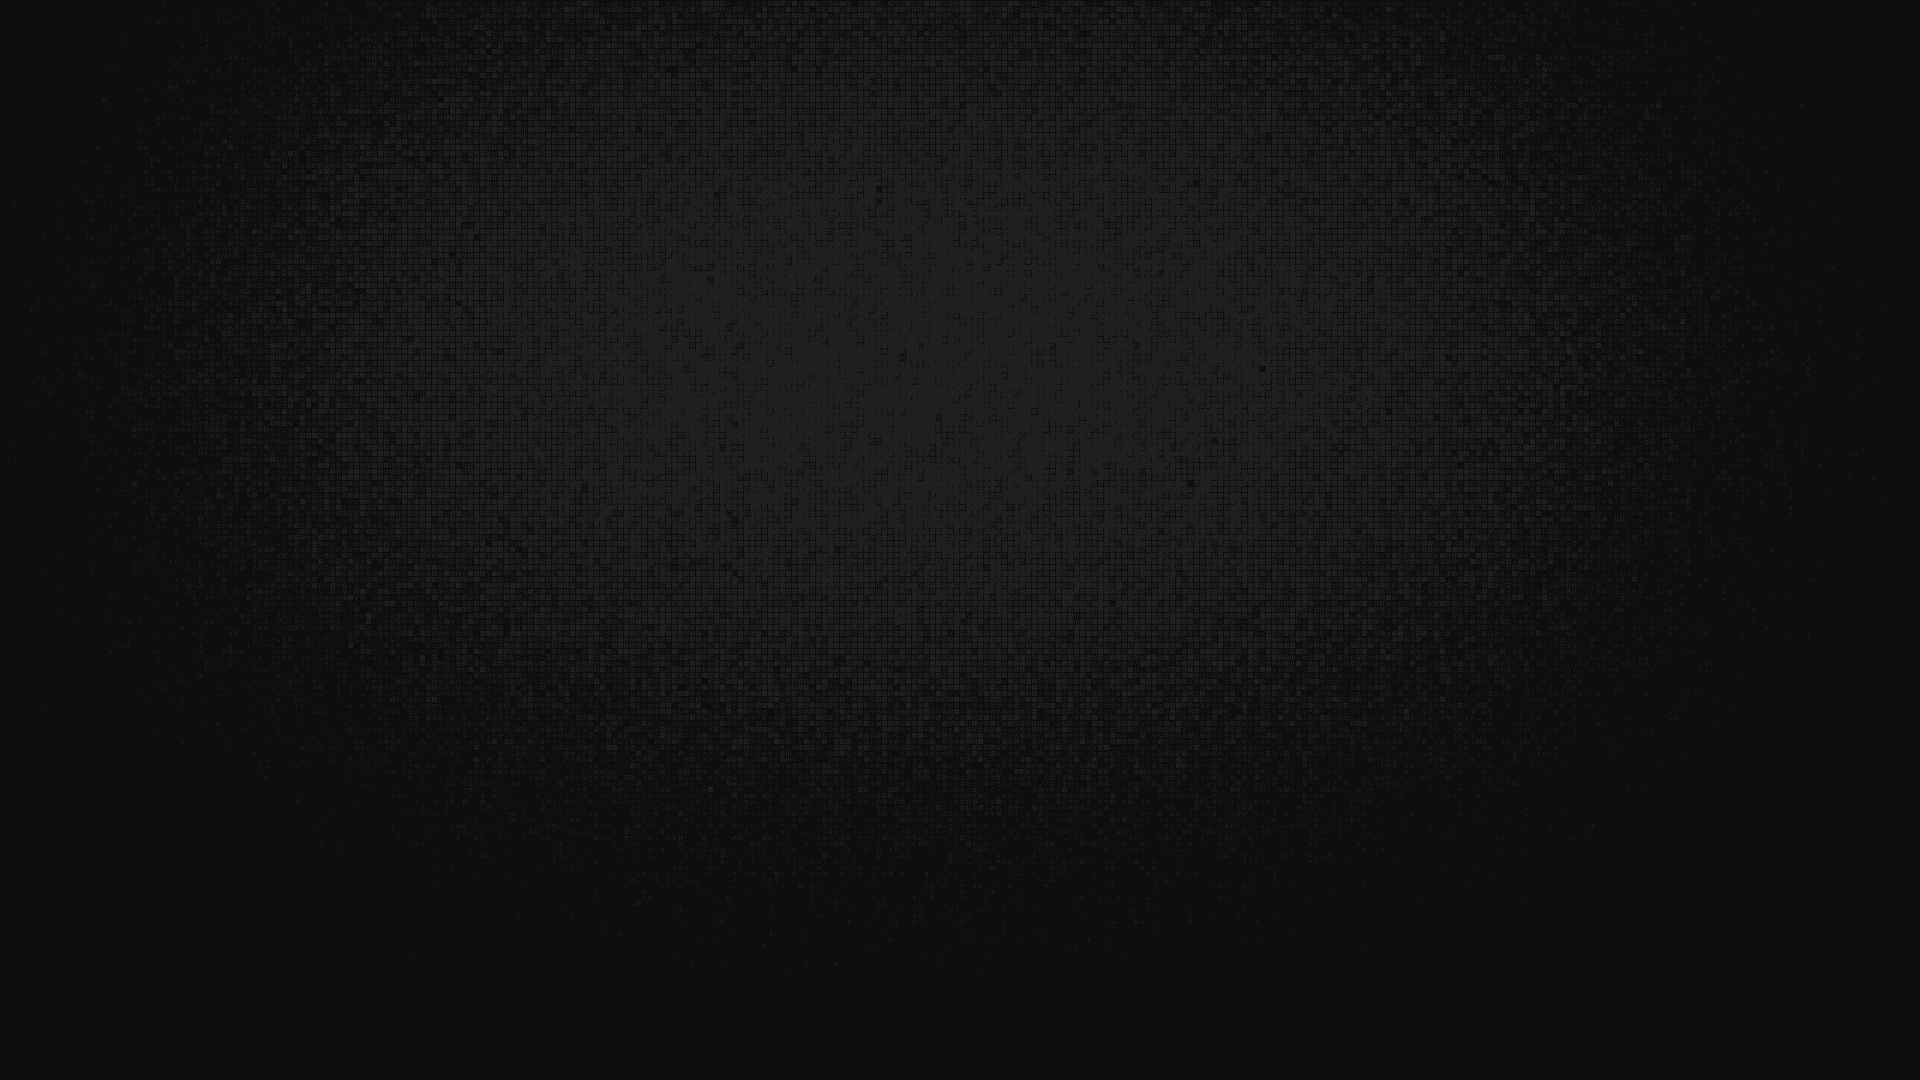 Featured image of post Plain Black Full Black Wallpaper Download / Black hd wallpapers, desktop and phone wallpapers.